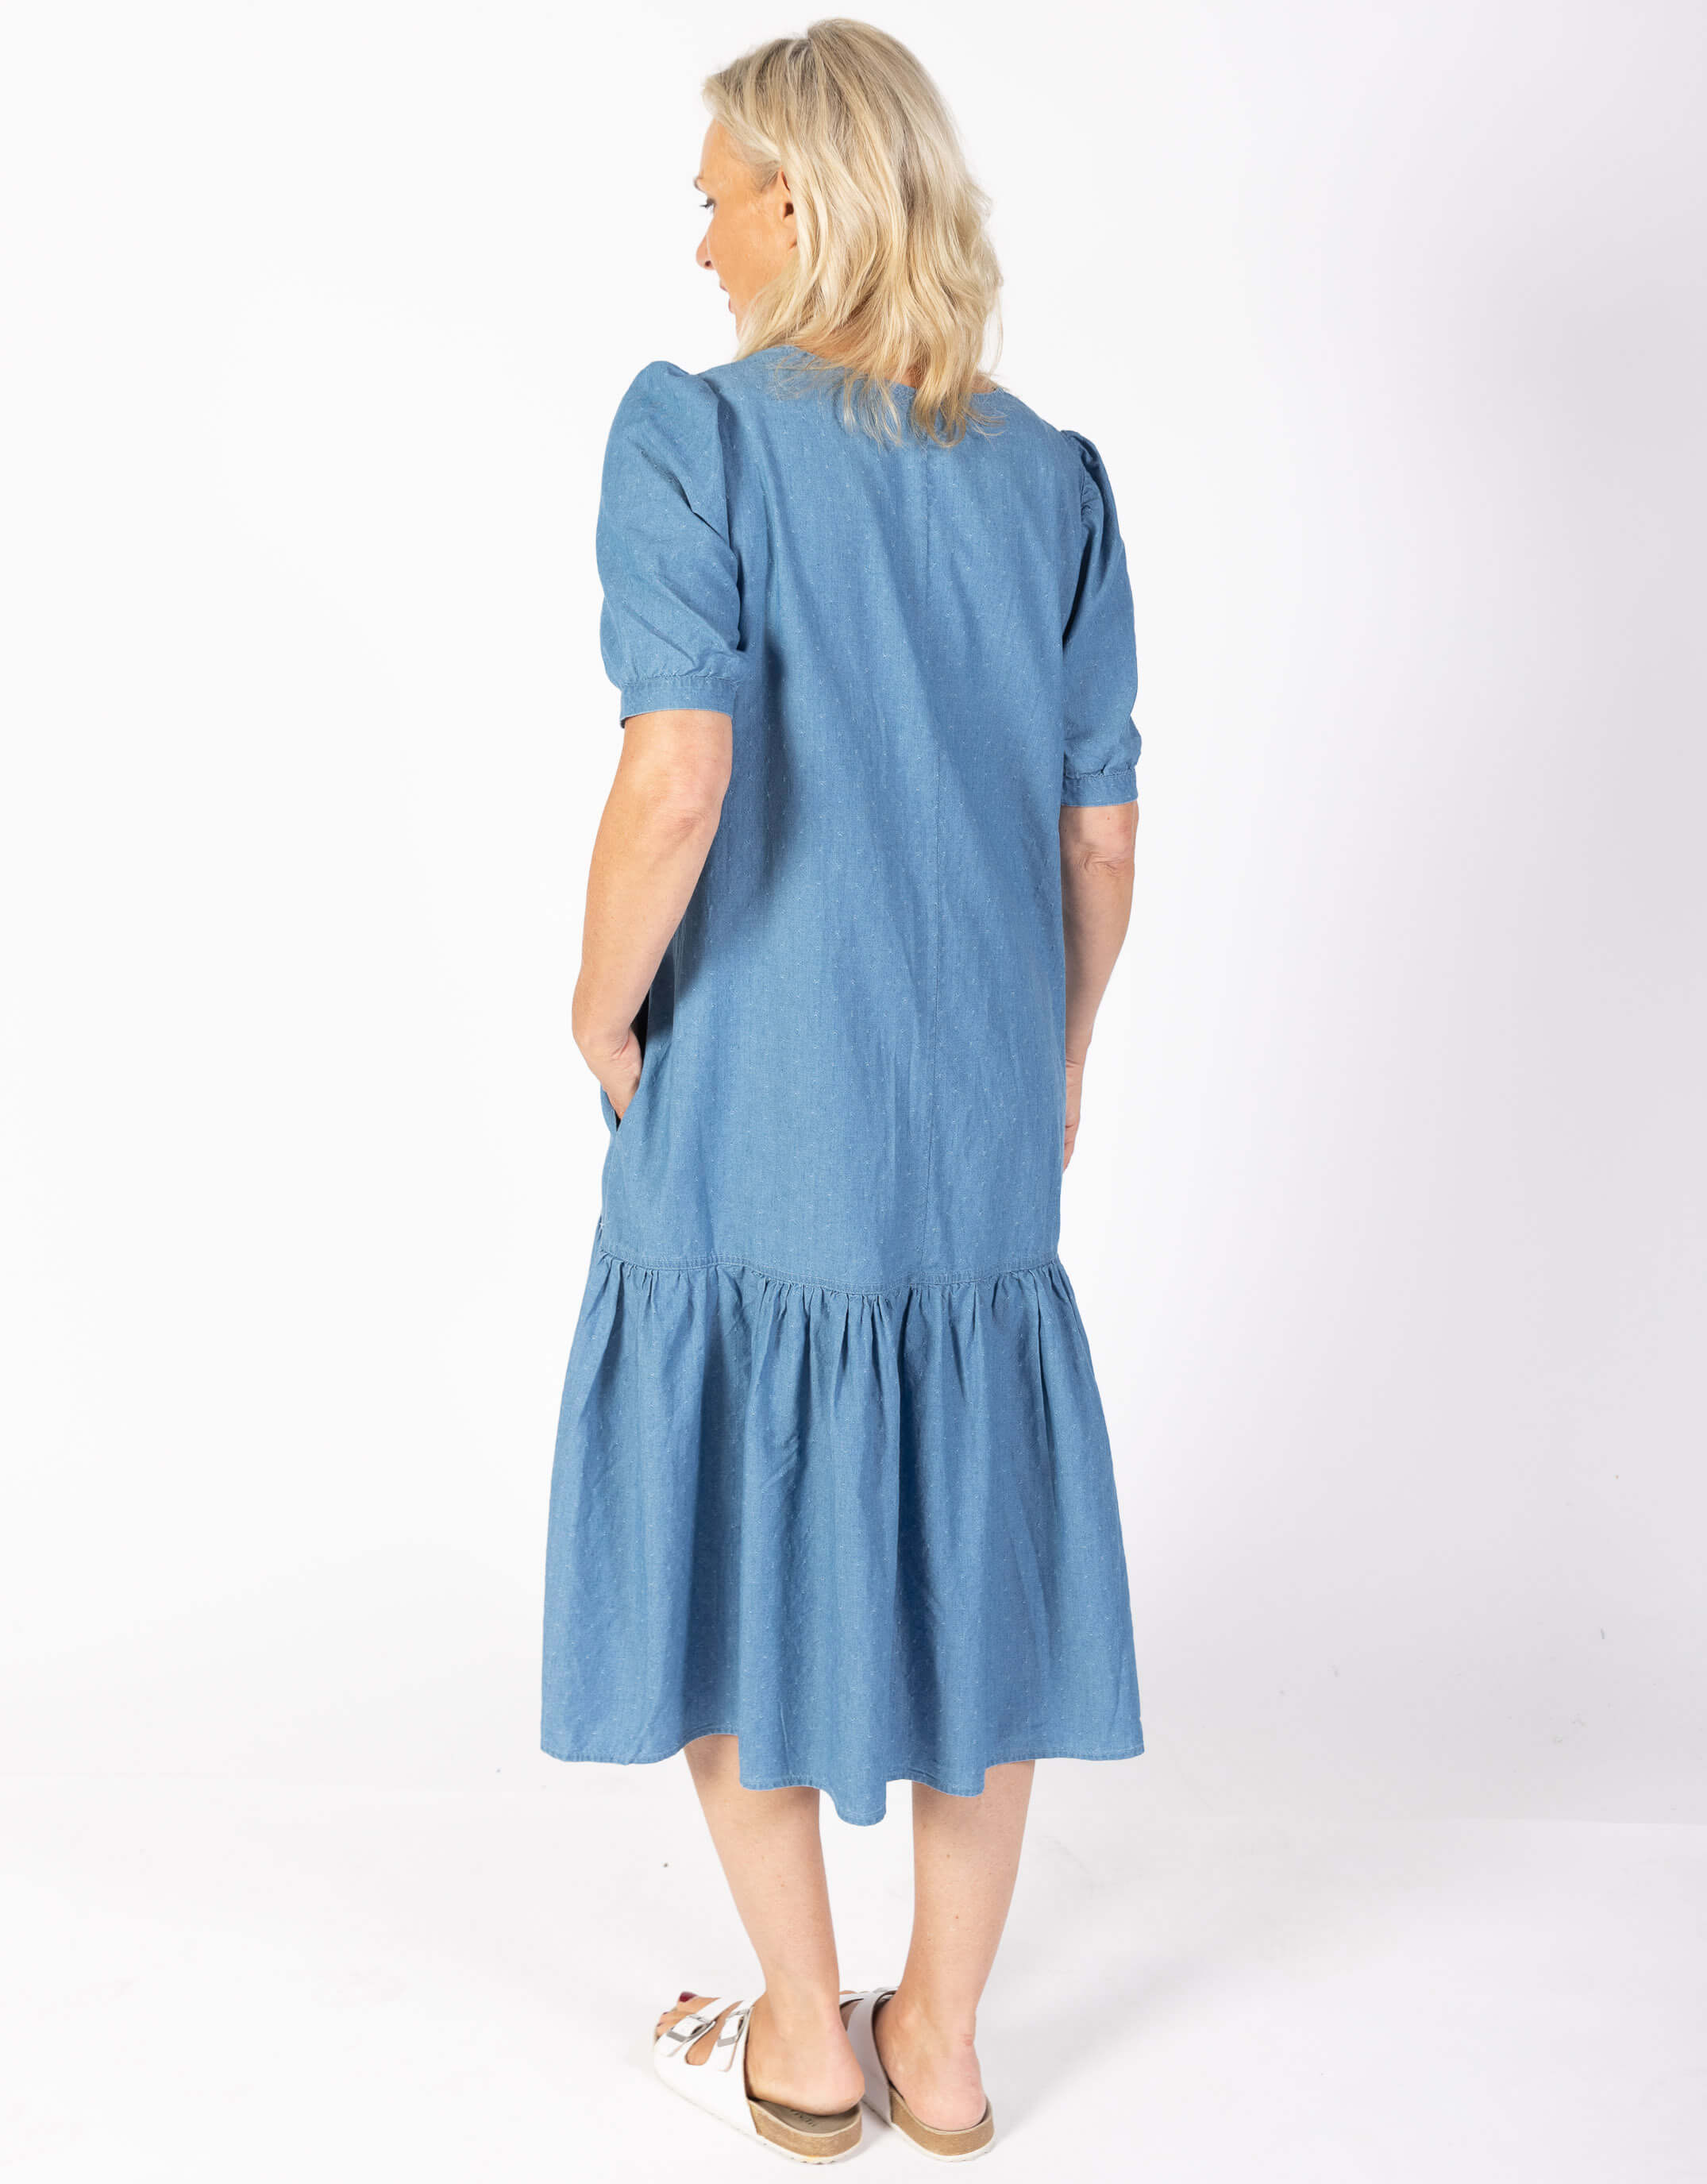 elm-christie-dress-indigo-dye-womens-clothing